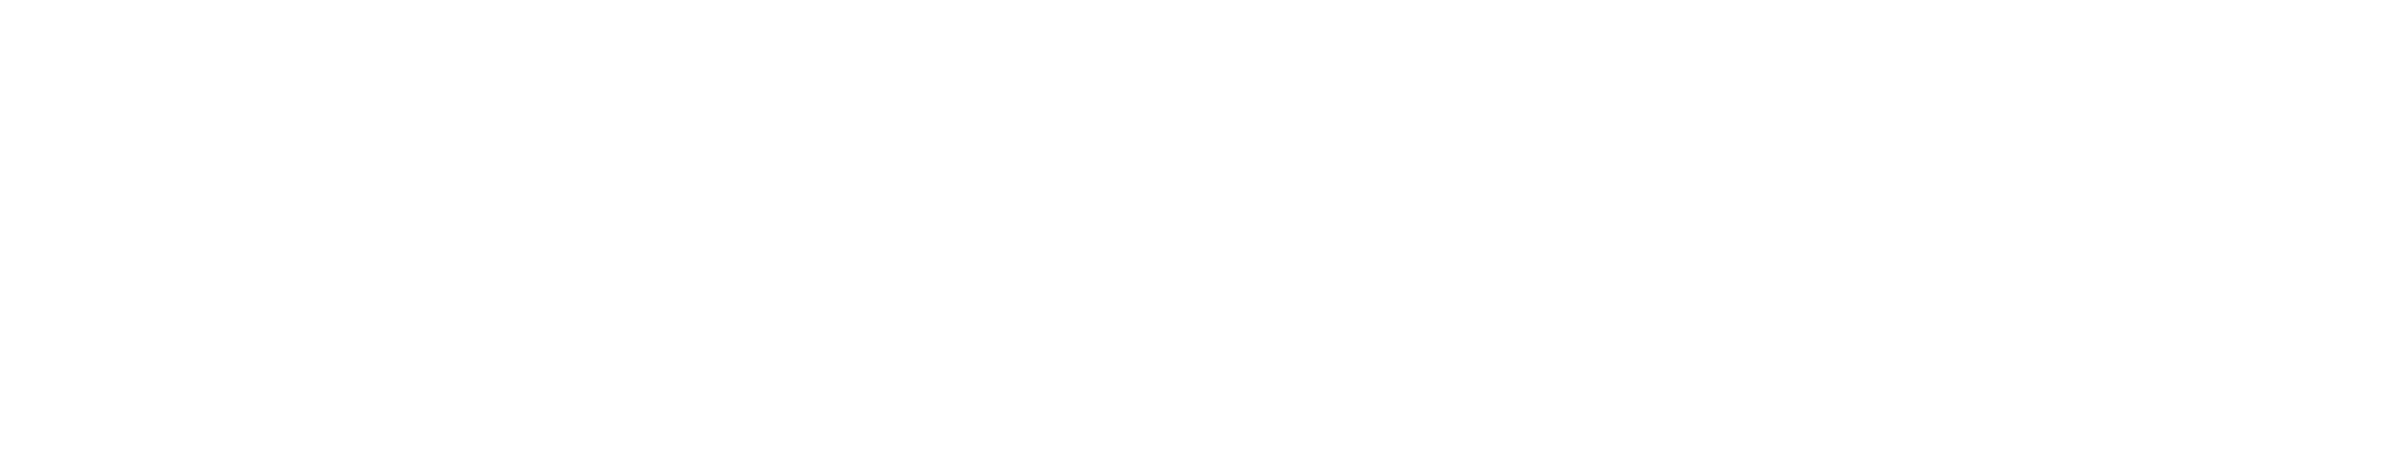 The Whistleblower Advocates Logo